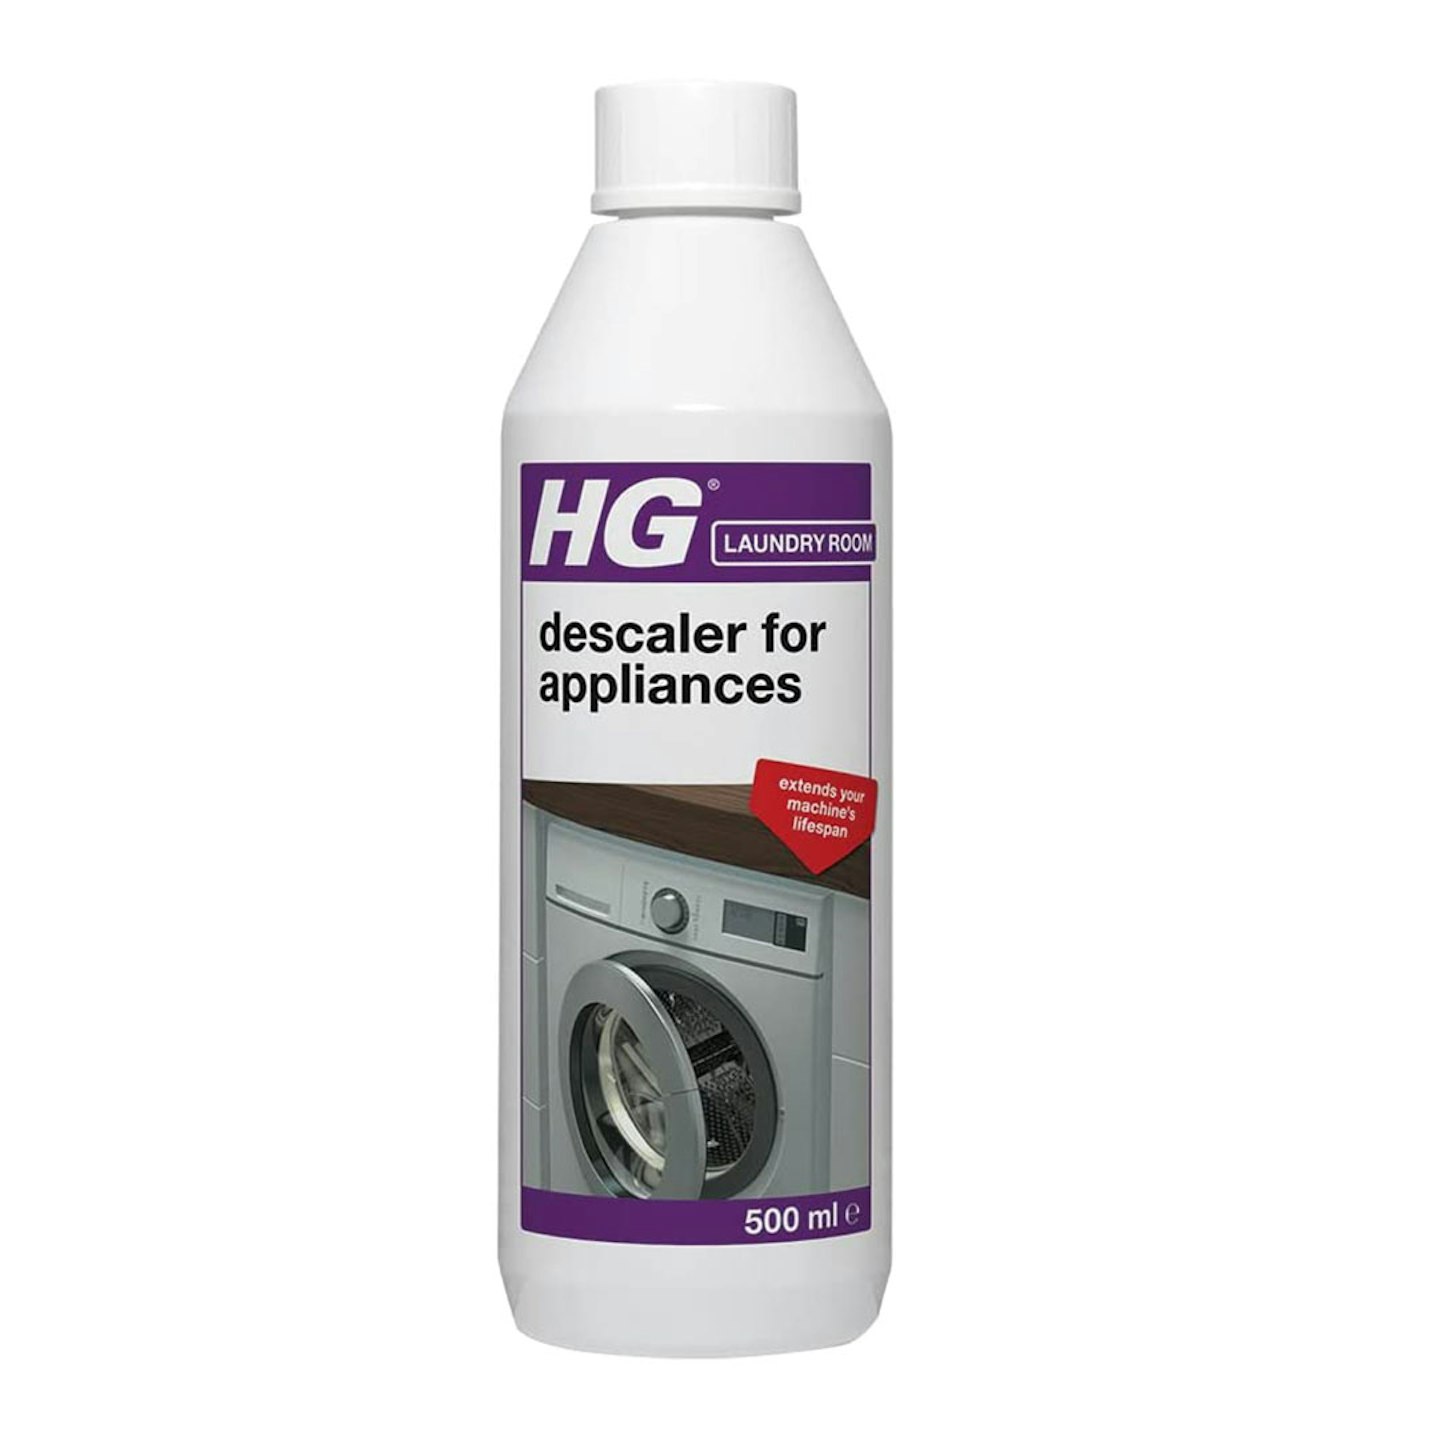 HG Descaler for Appliances